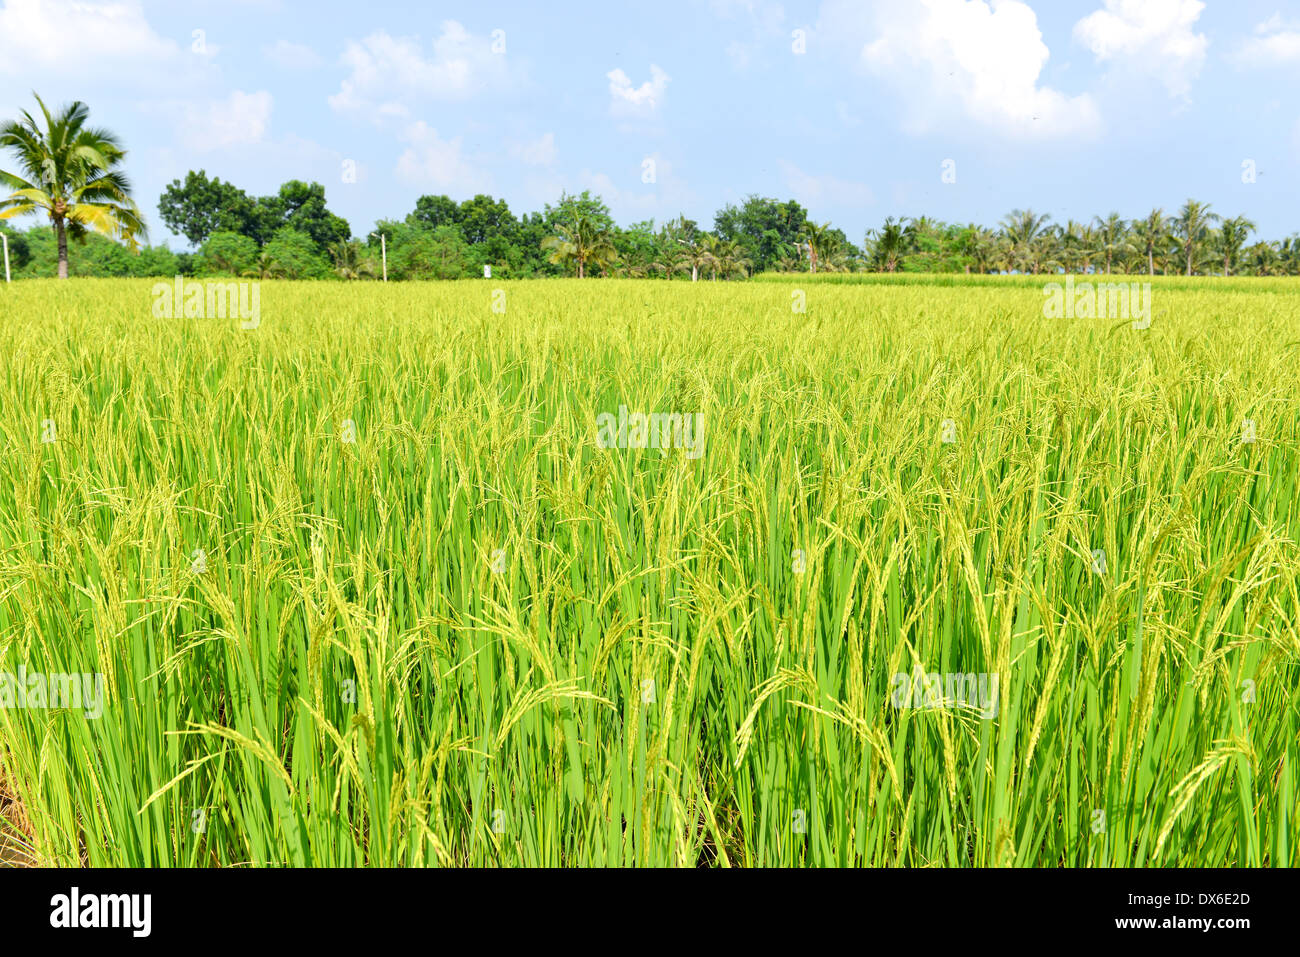 Rice paddy fields, Thailand Stock Photo